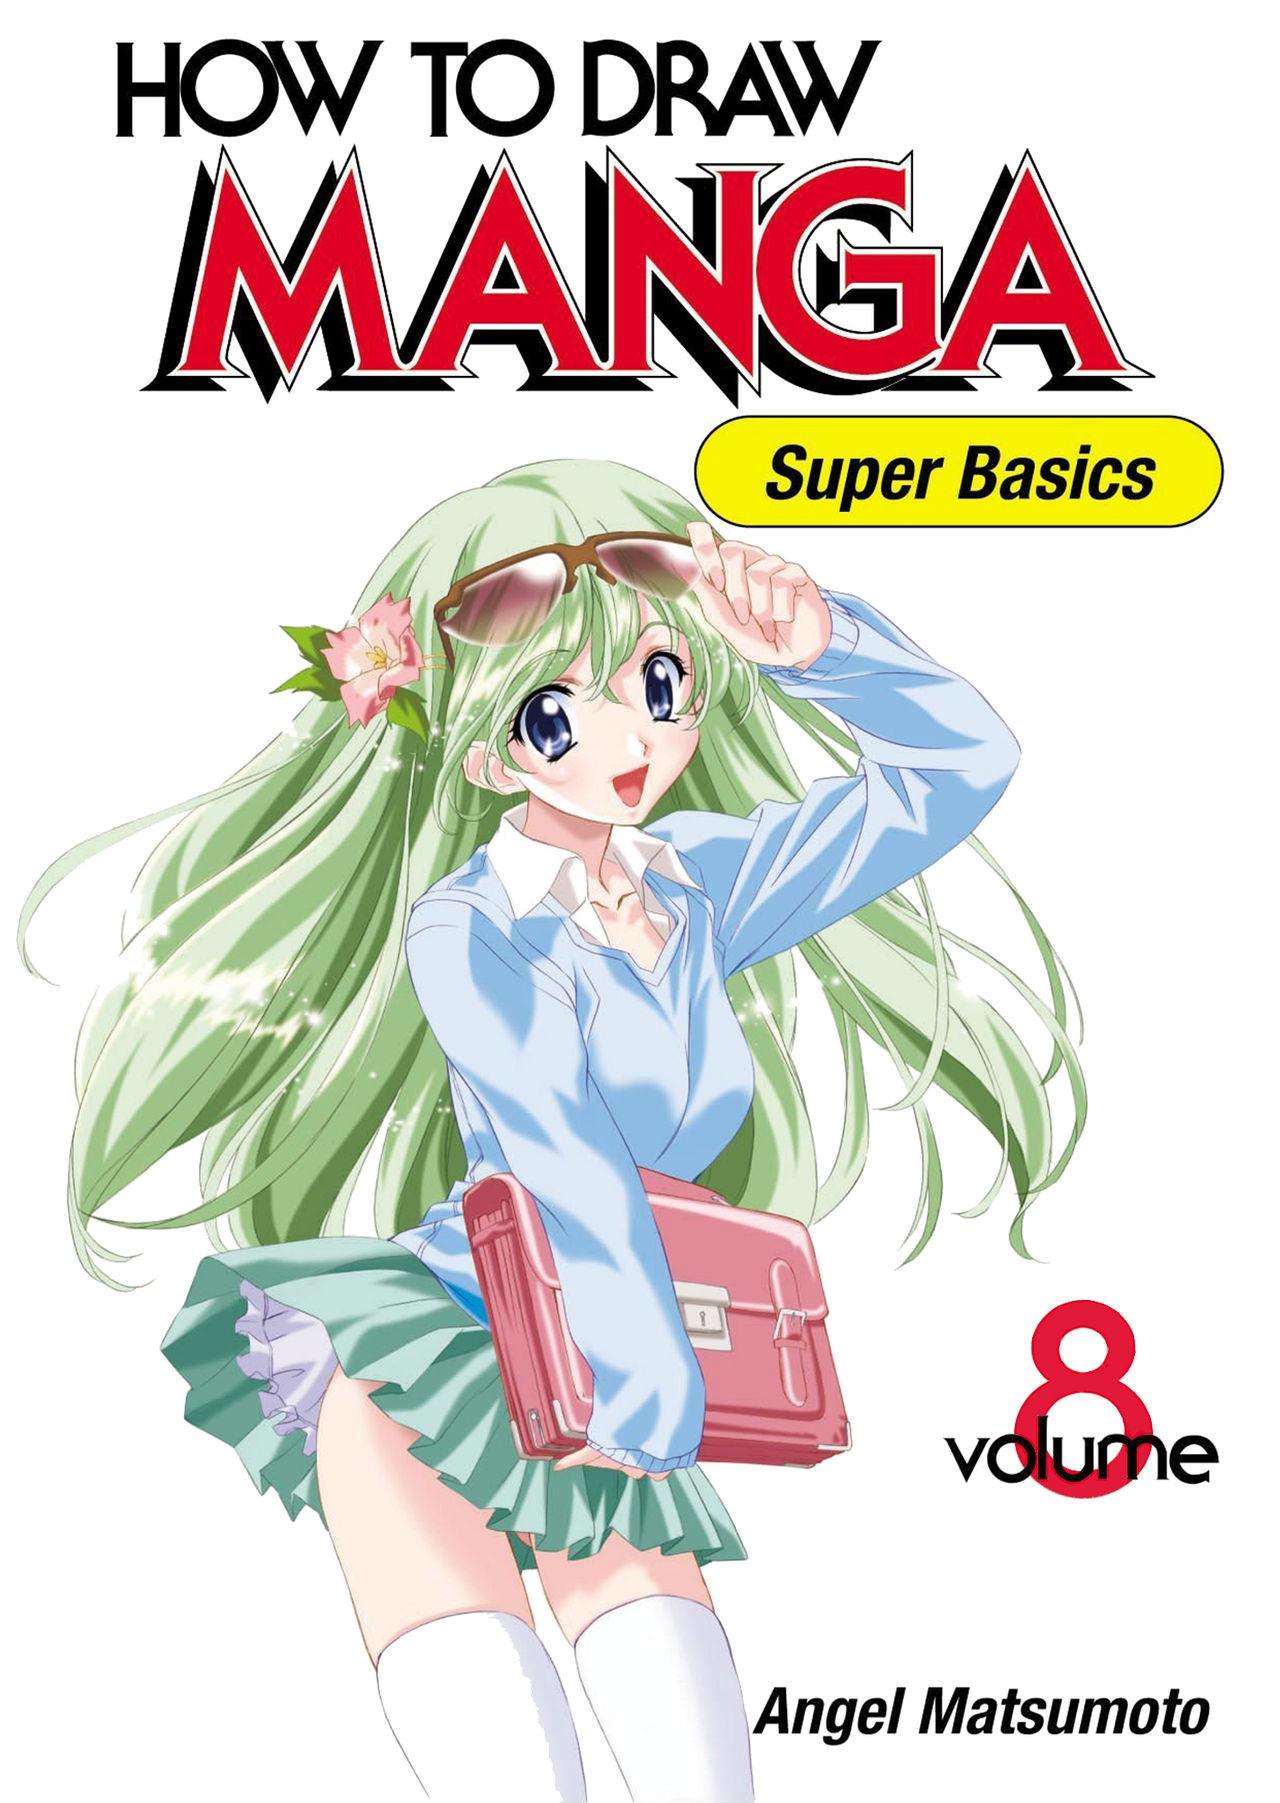 How to Draw Manga Vol. 8 - Super Basics by Angel Matsumoto 0